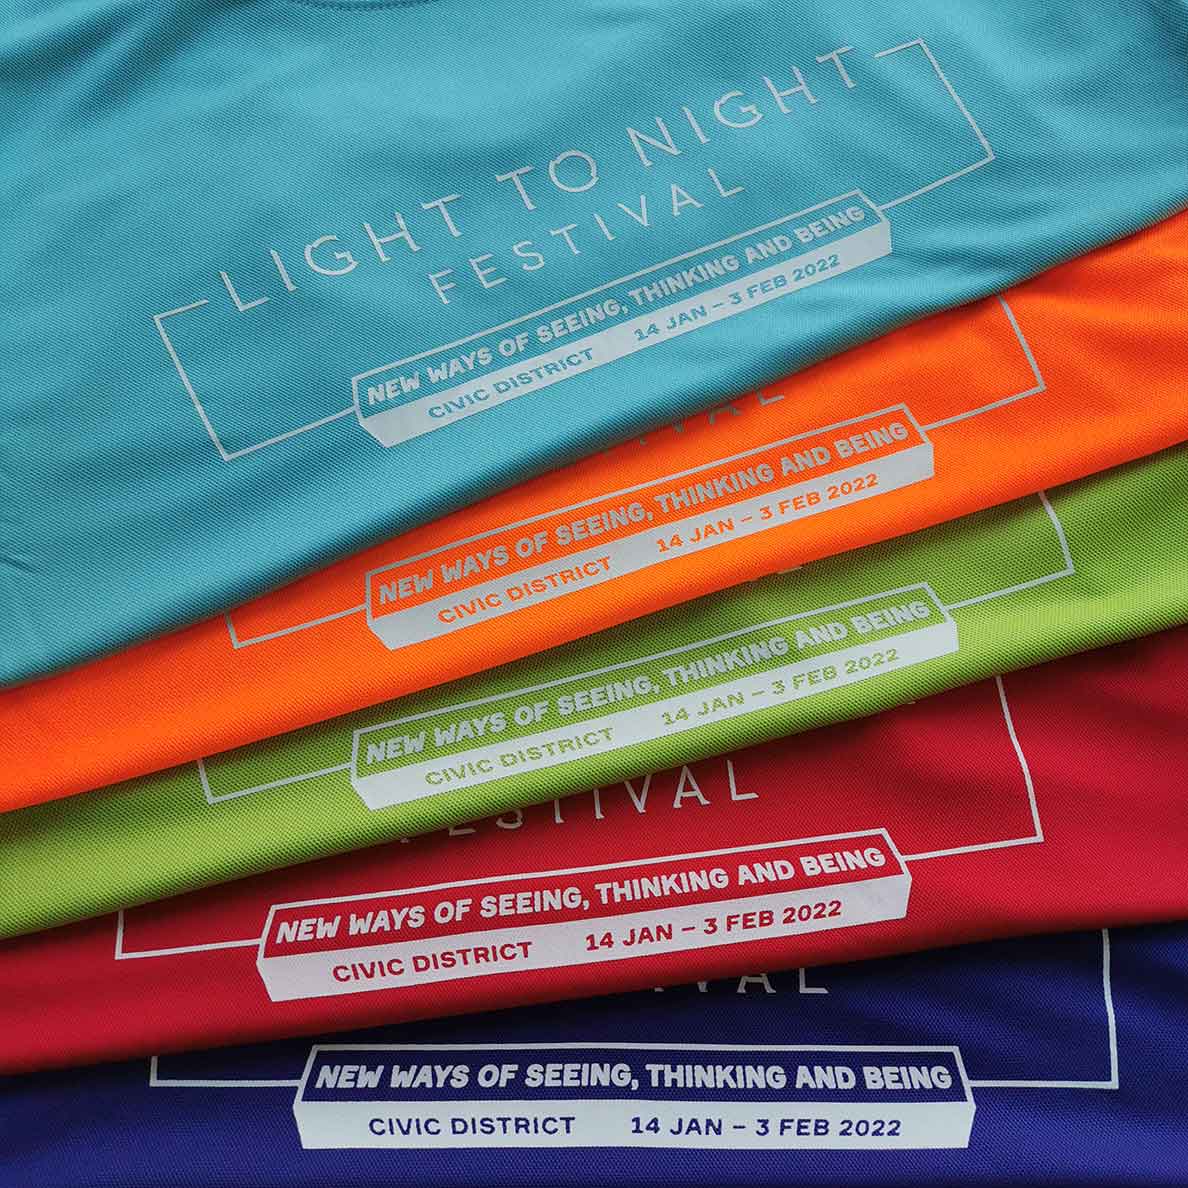 light to night festival 2022